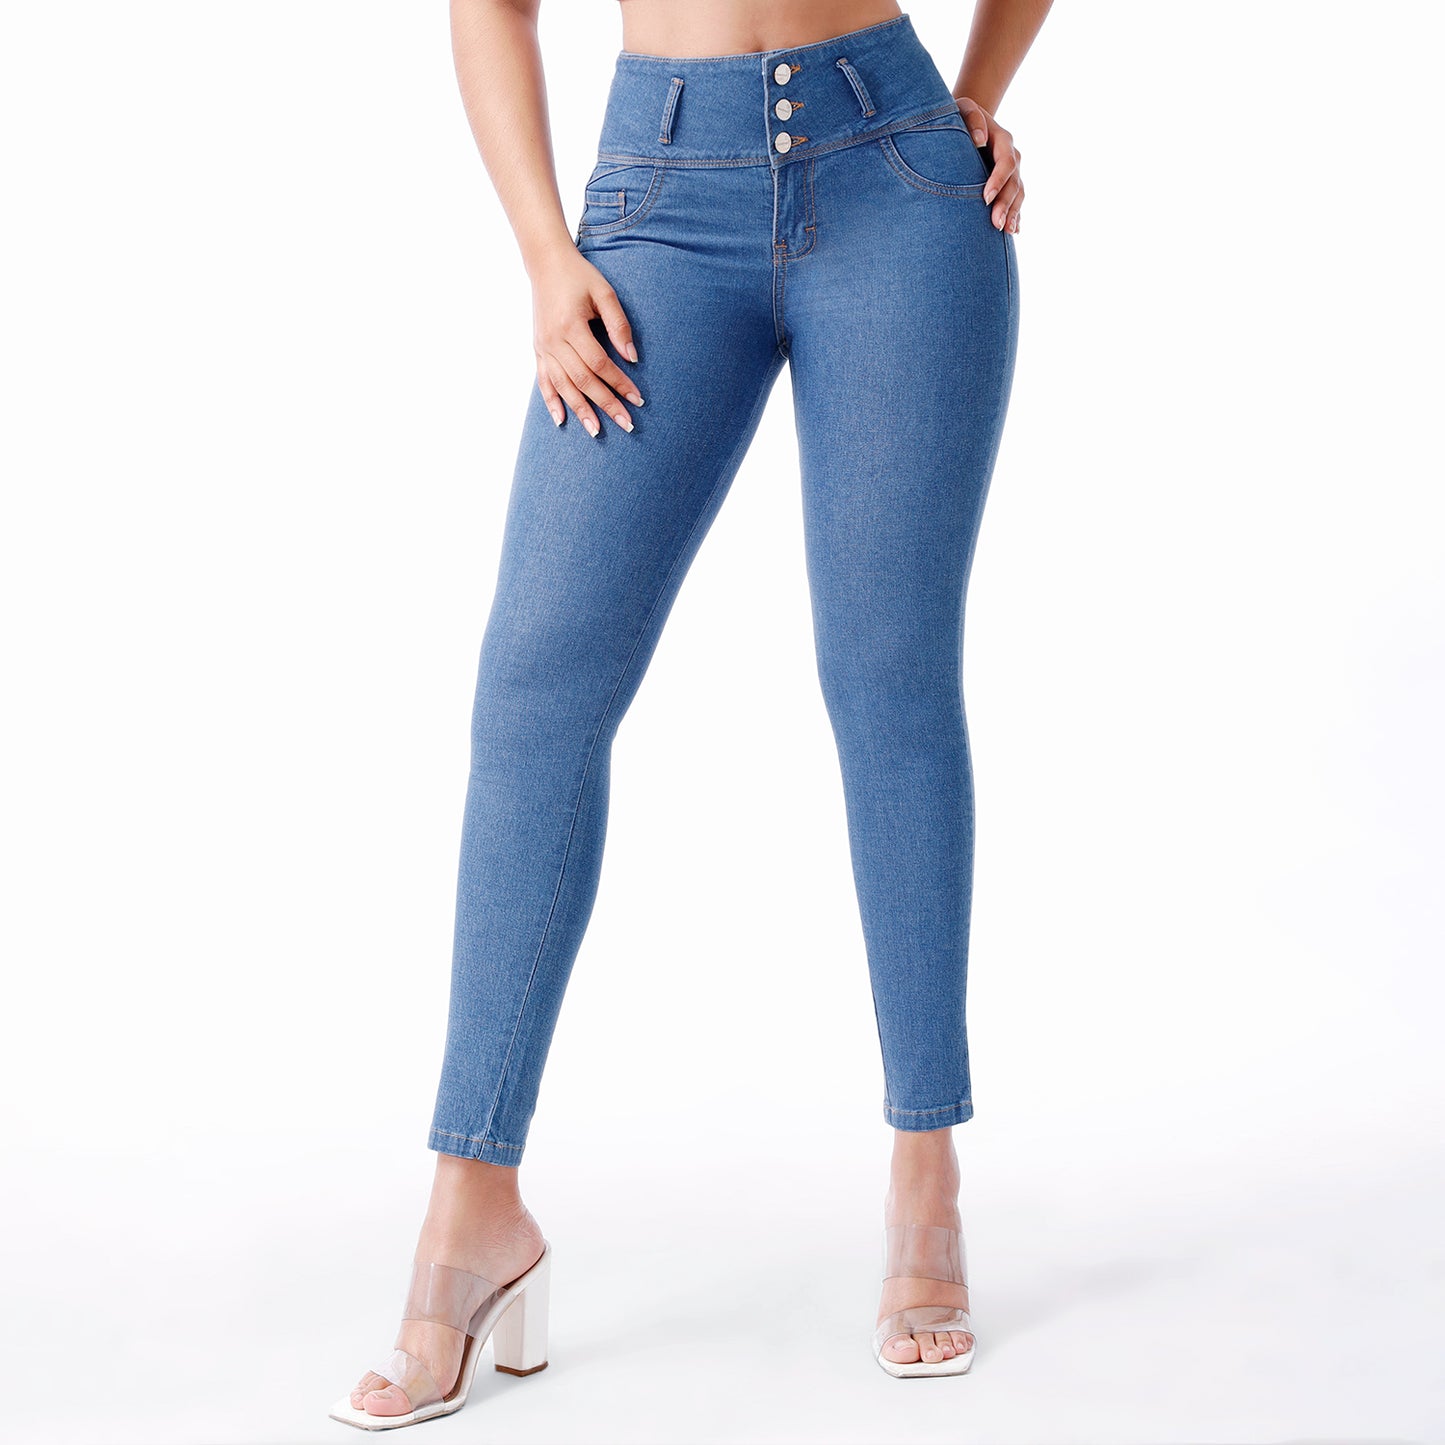 Jeans Push Up Mujer Pitillo Cintura Cristal - 221646